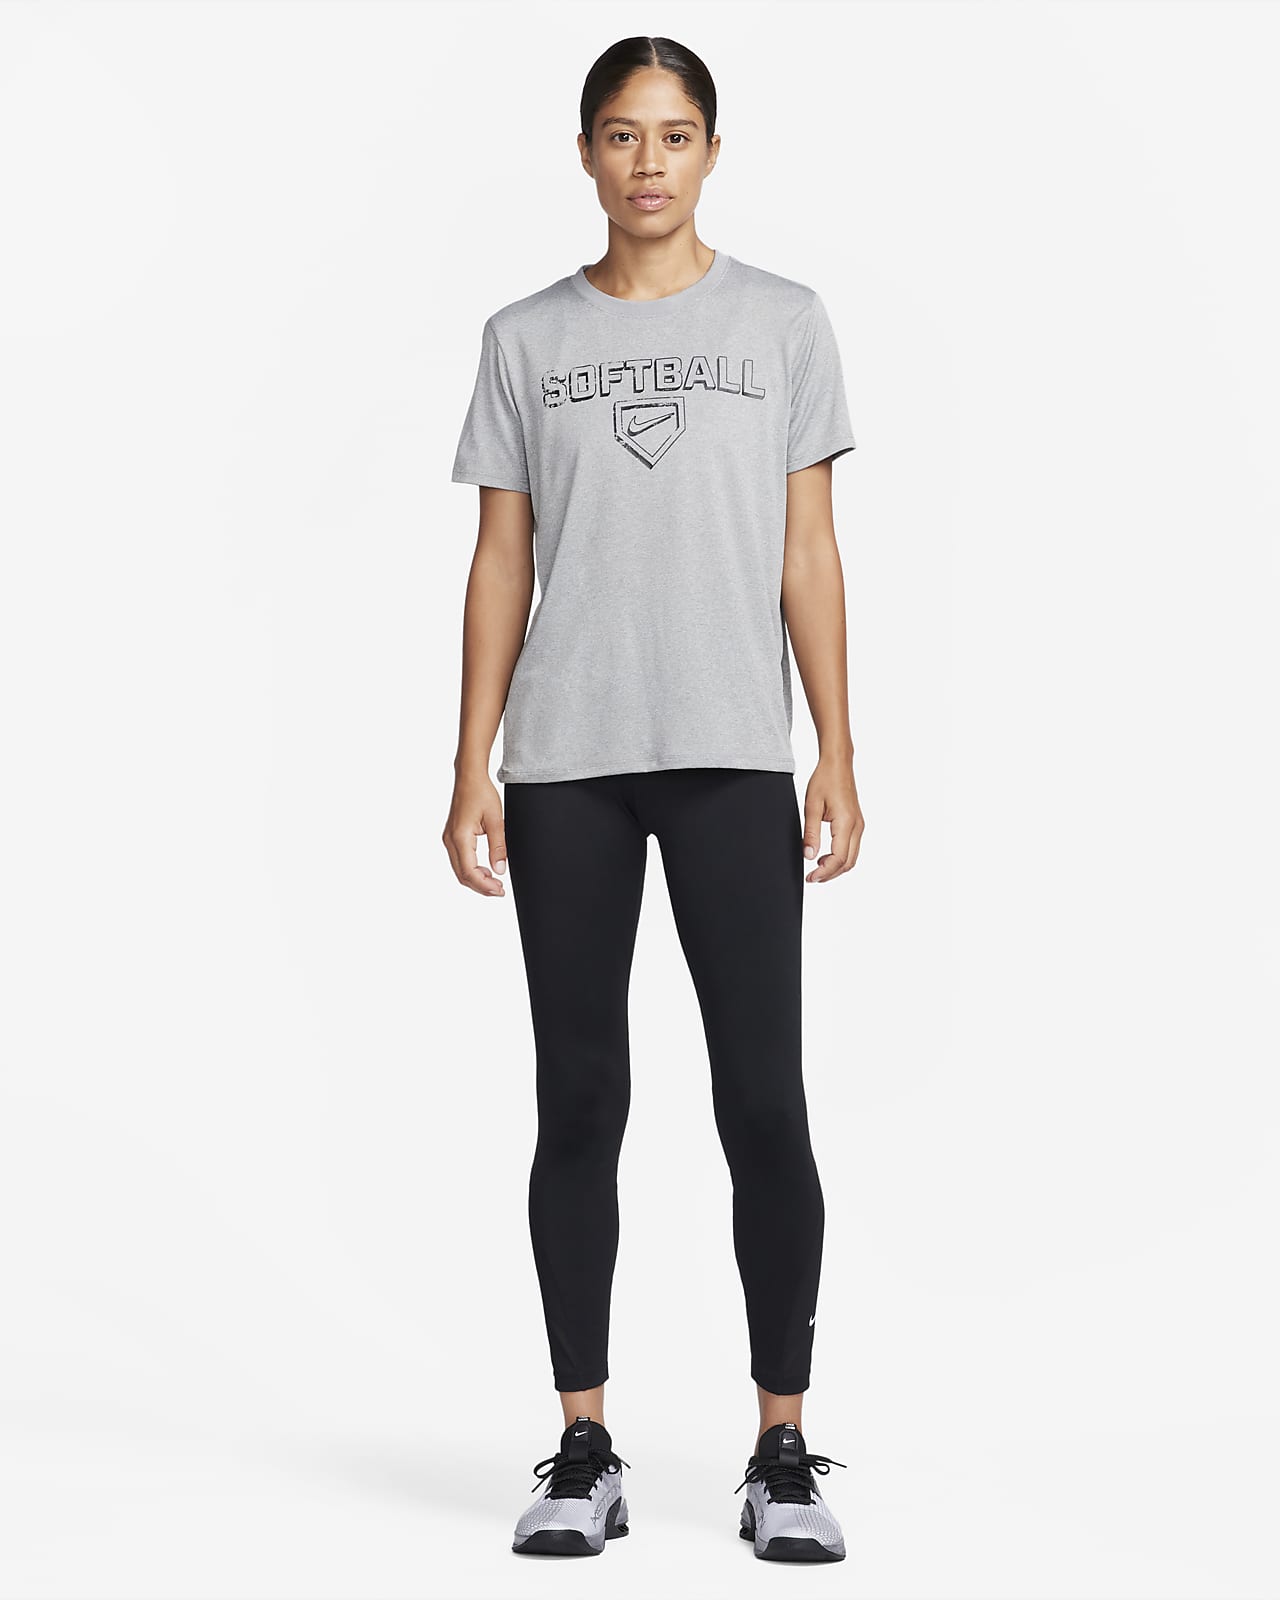 Nike Dri-FIT Women's Softball T-Shirt.